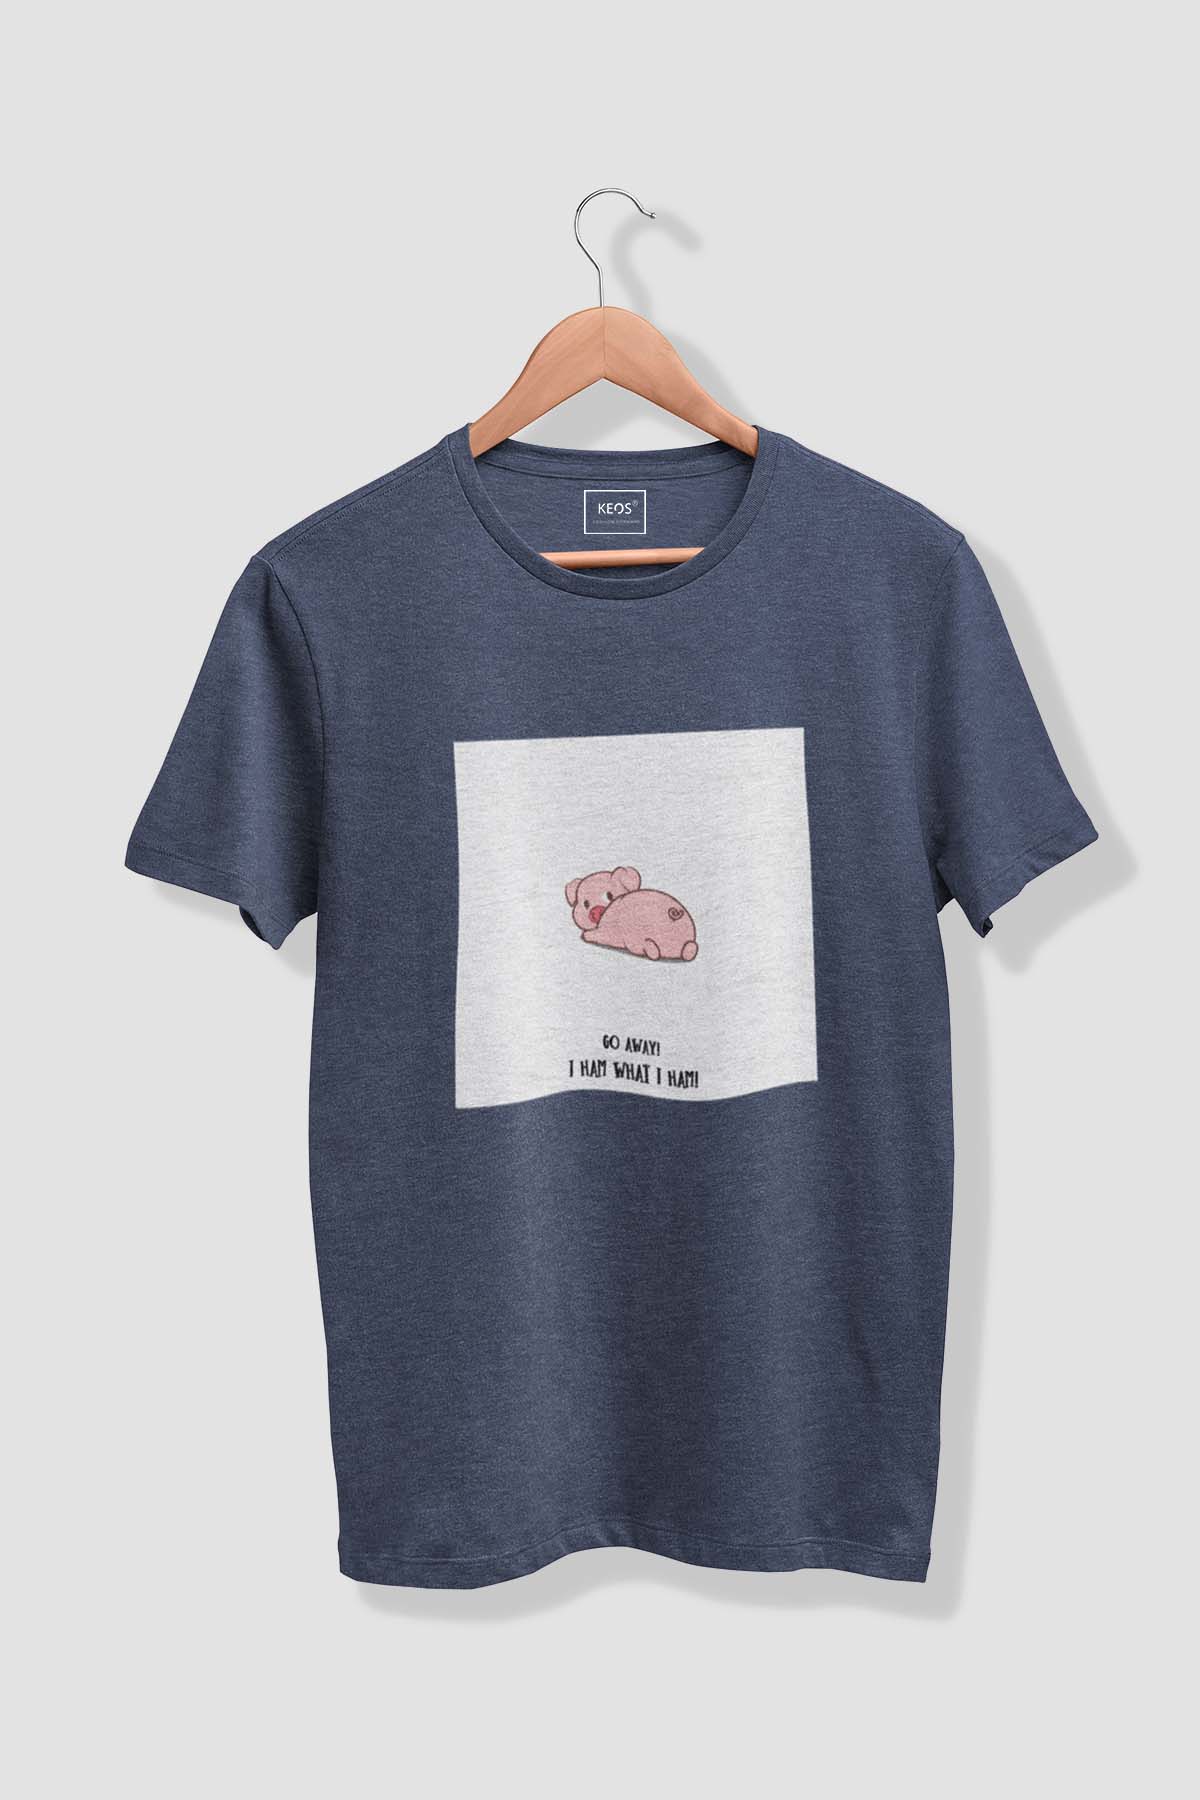 I Ham What - Melange Cotton T-shirt - keos.life